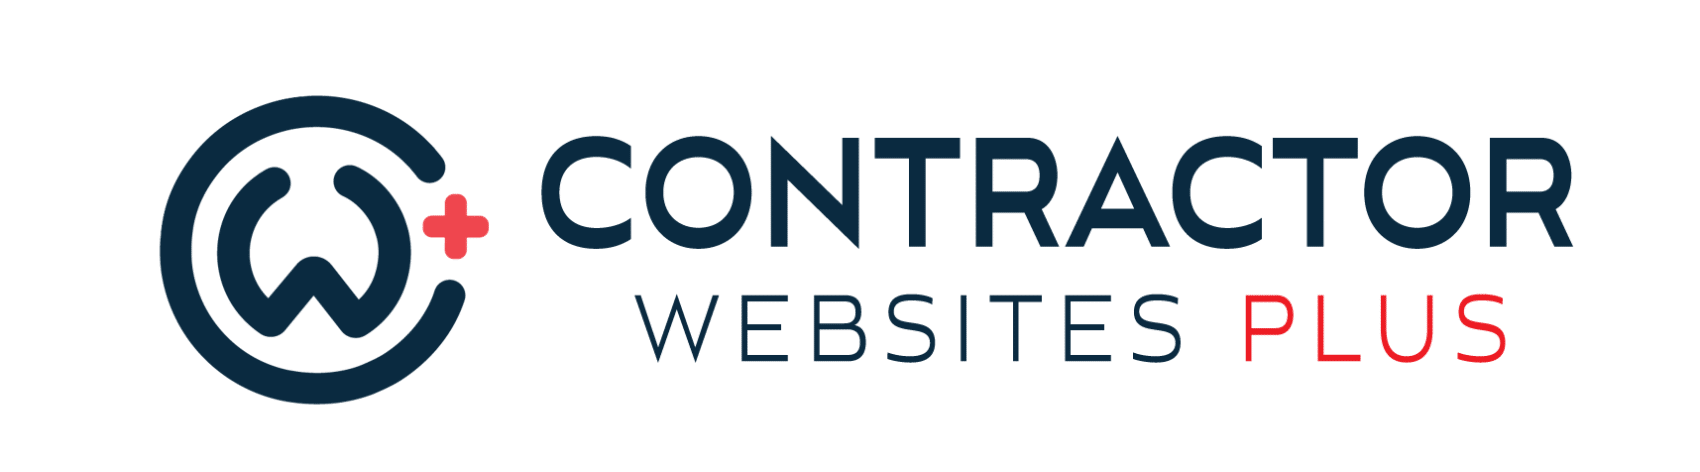 Contractor Websites Plus Full